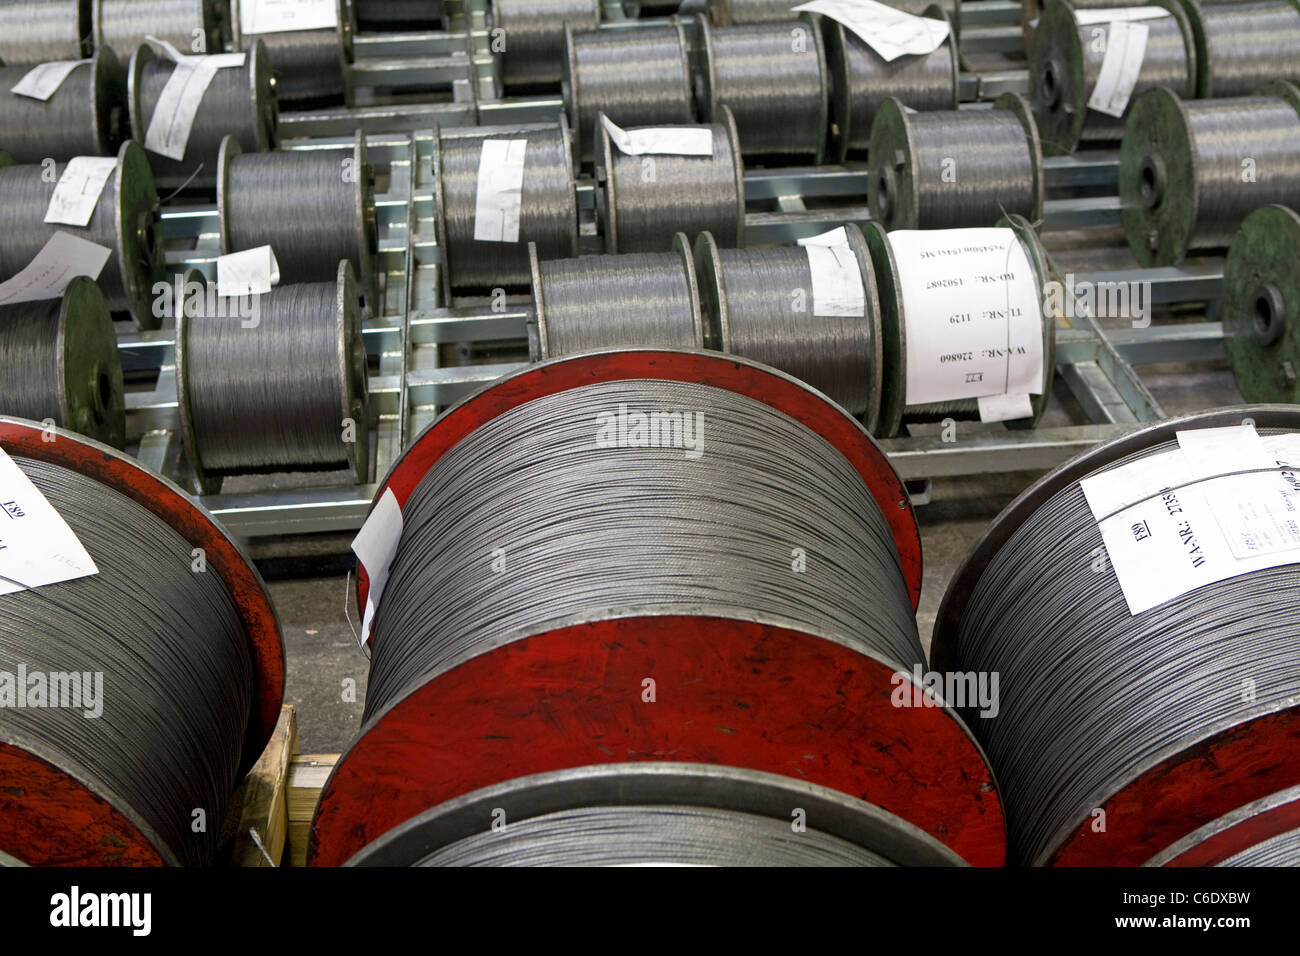 Pfeifer Drako wire rope factory, Muelheim an der Ruhr, Germany Stock Photo